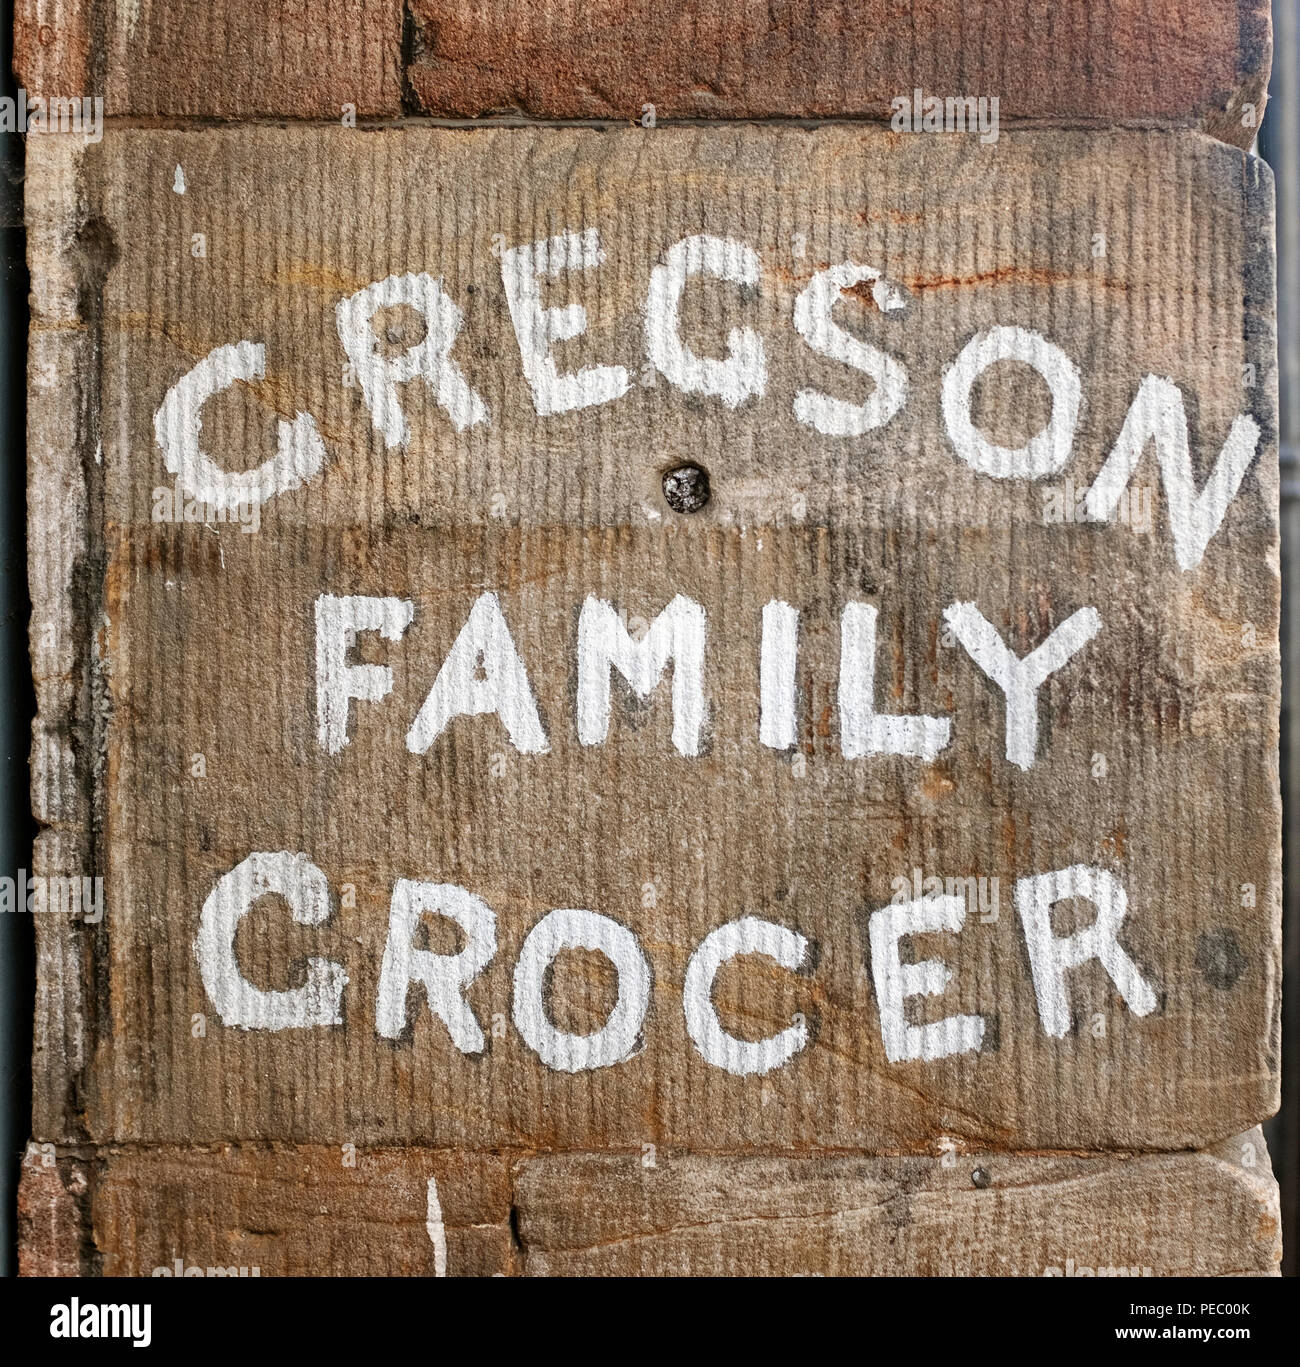 La famille Gregson Grocer signe sur pierre, de Appleby-in-Westmorland, Cumbria, Angleterre. United Kingdom. Banque D'Images